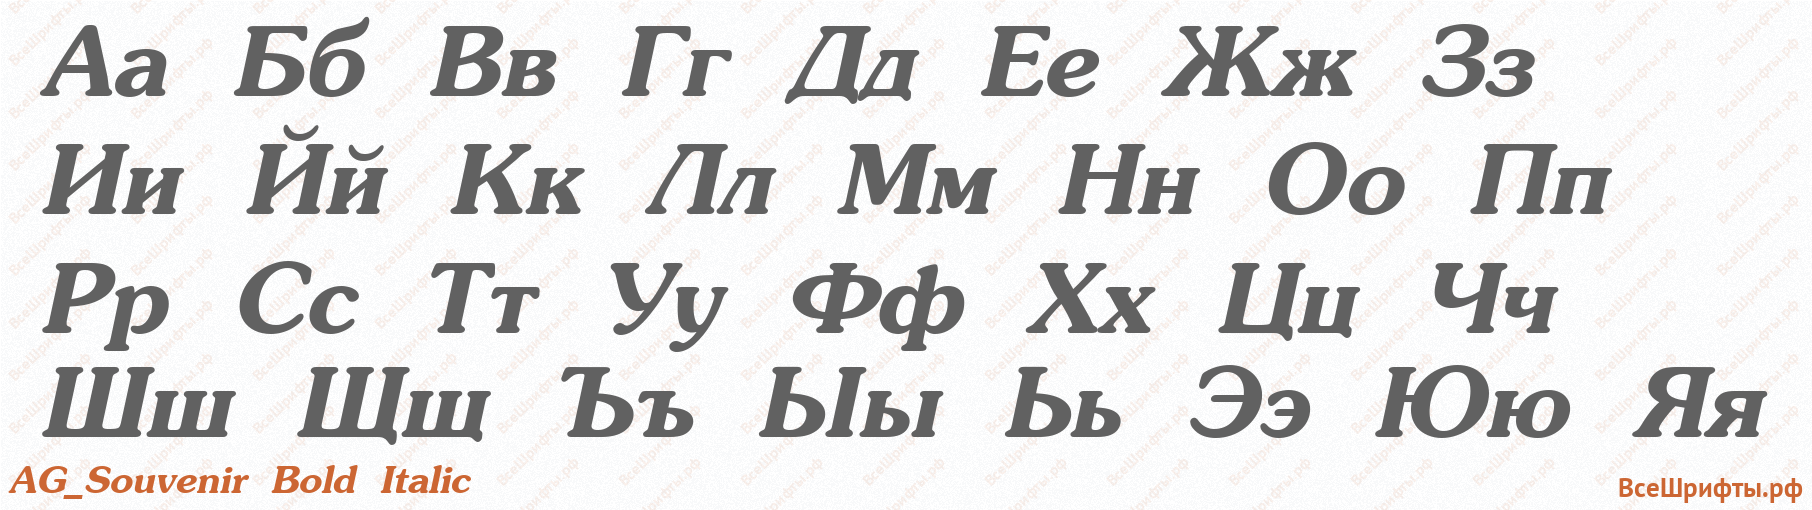 Шрифт AG_Souvenir Bold Italic с русскими буквами